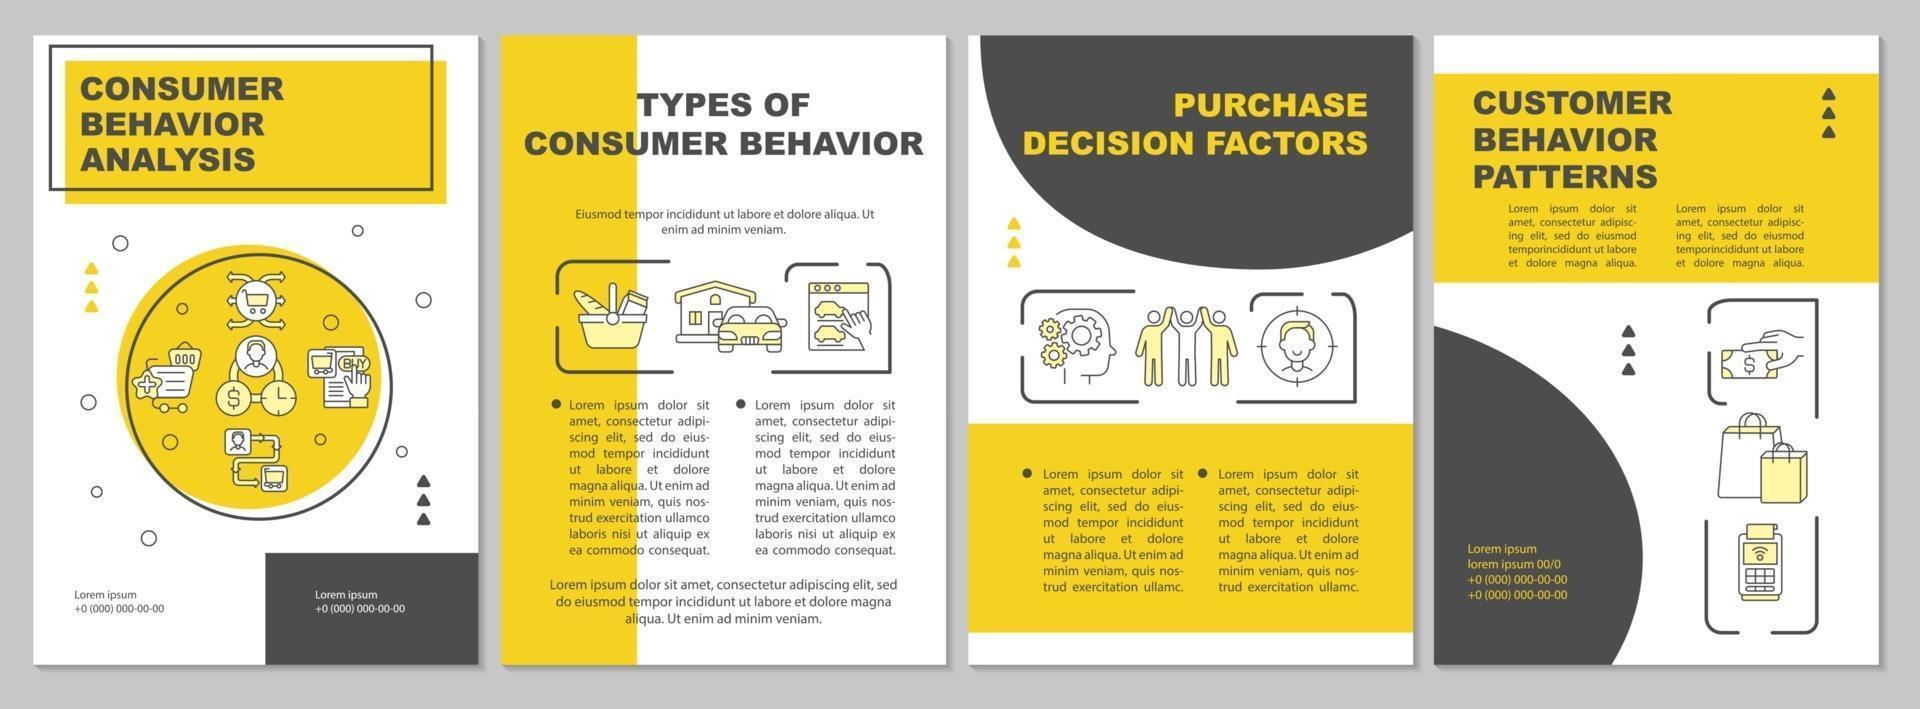 Consumer behavior analysis brochure template vector